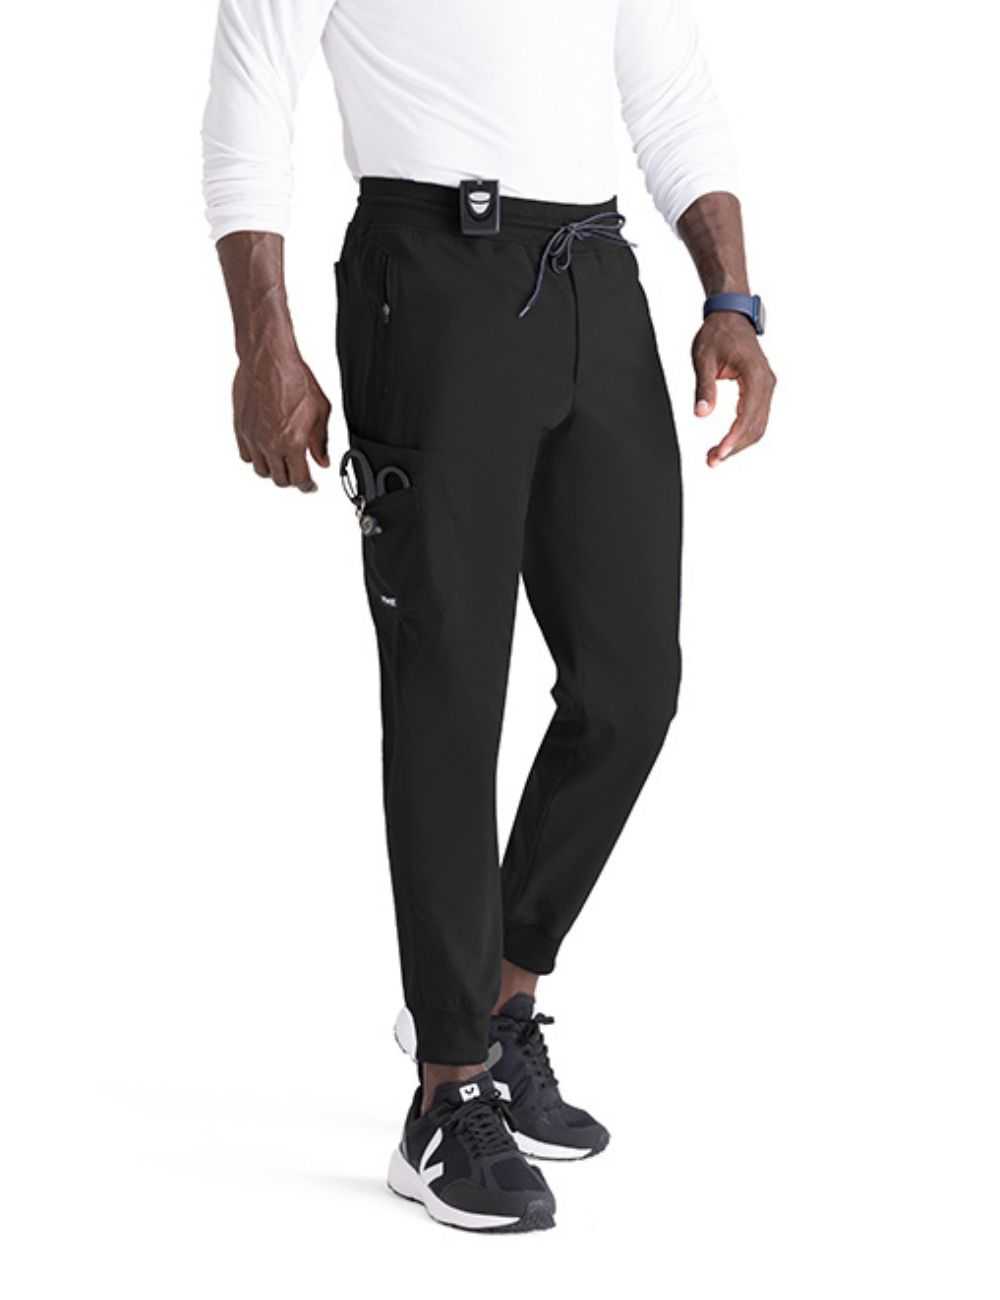 Men's medical pants, Grey's Anatomy Stretch 5 pockets (GRSP550)